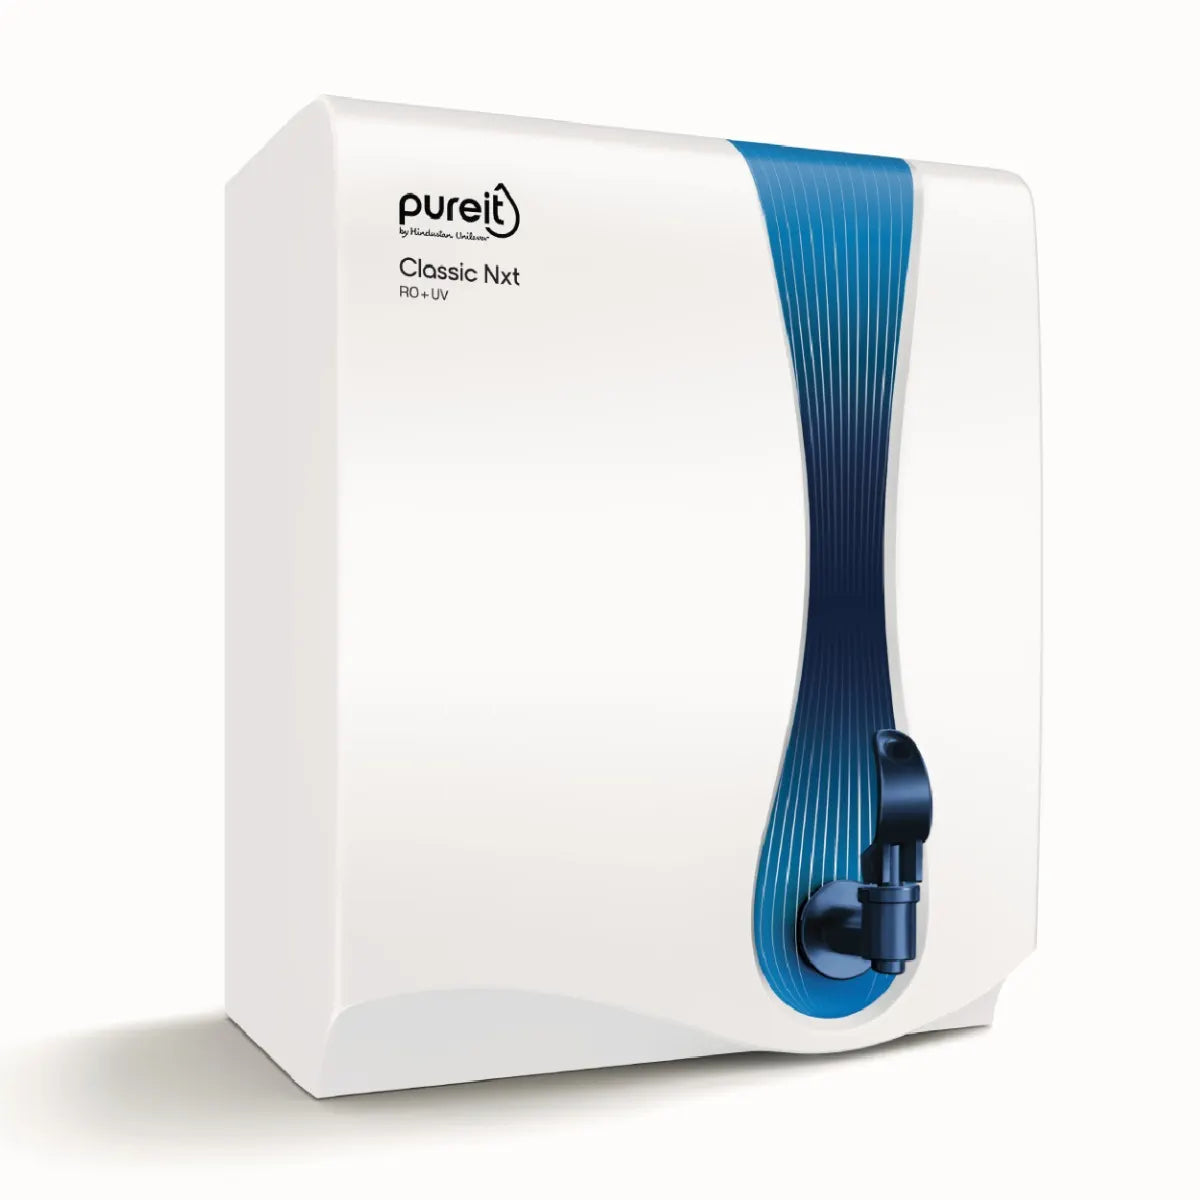 Hindustan Pureit Classic Nxt RO+UV Water Purifier with 7L Storage